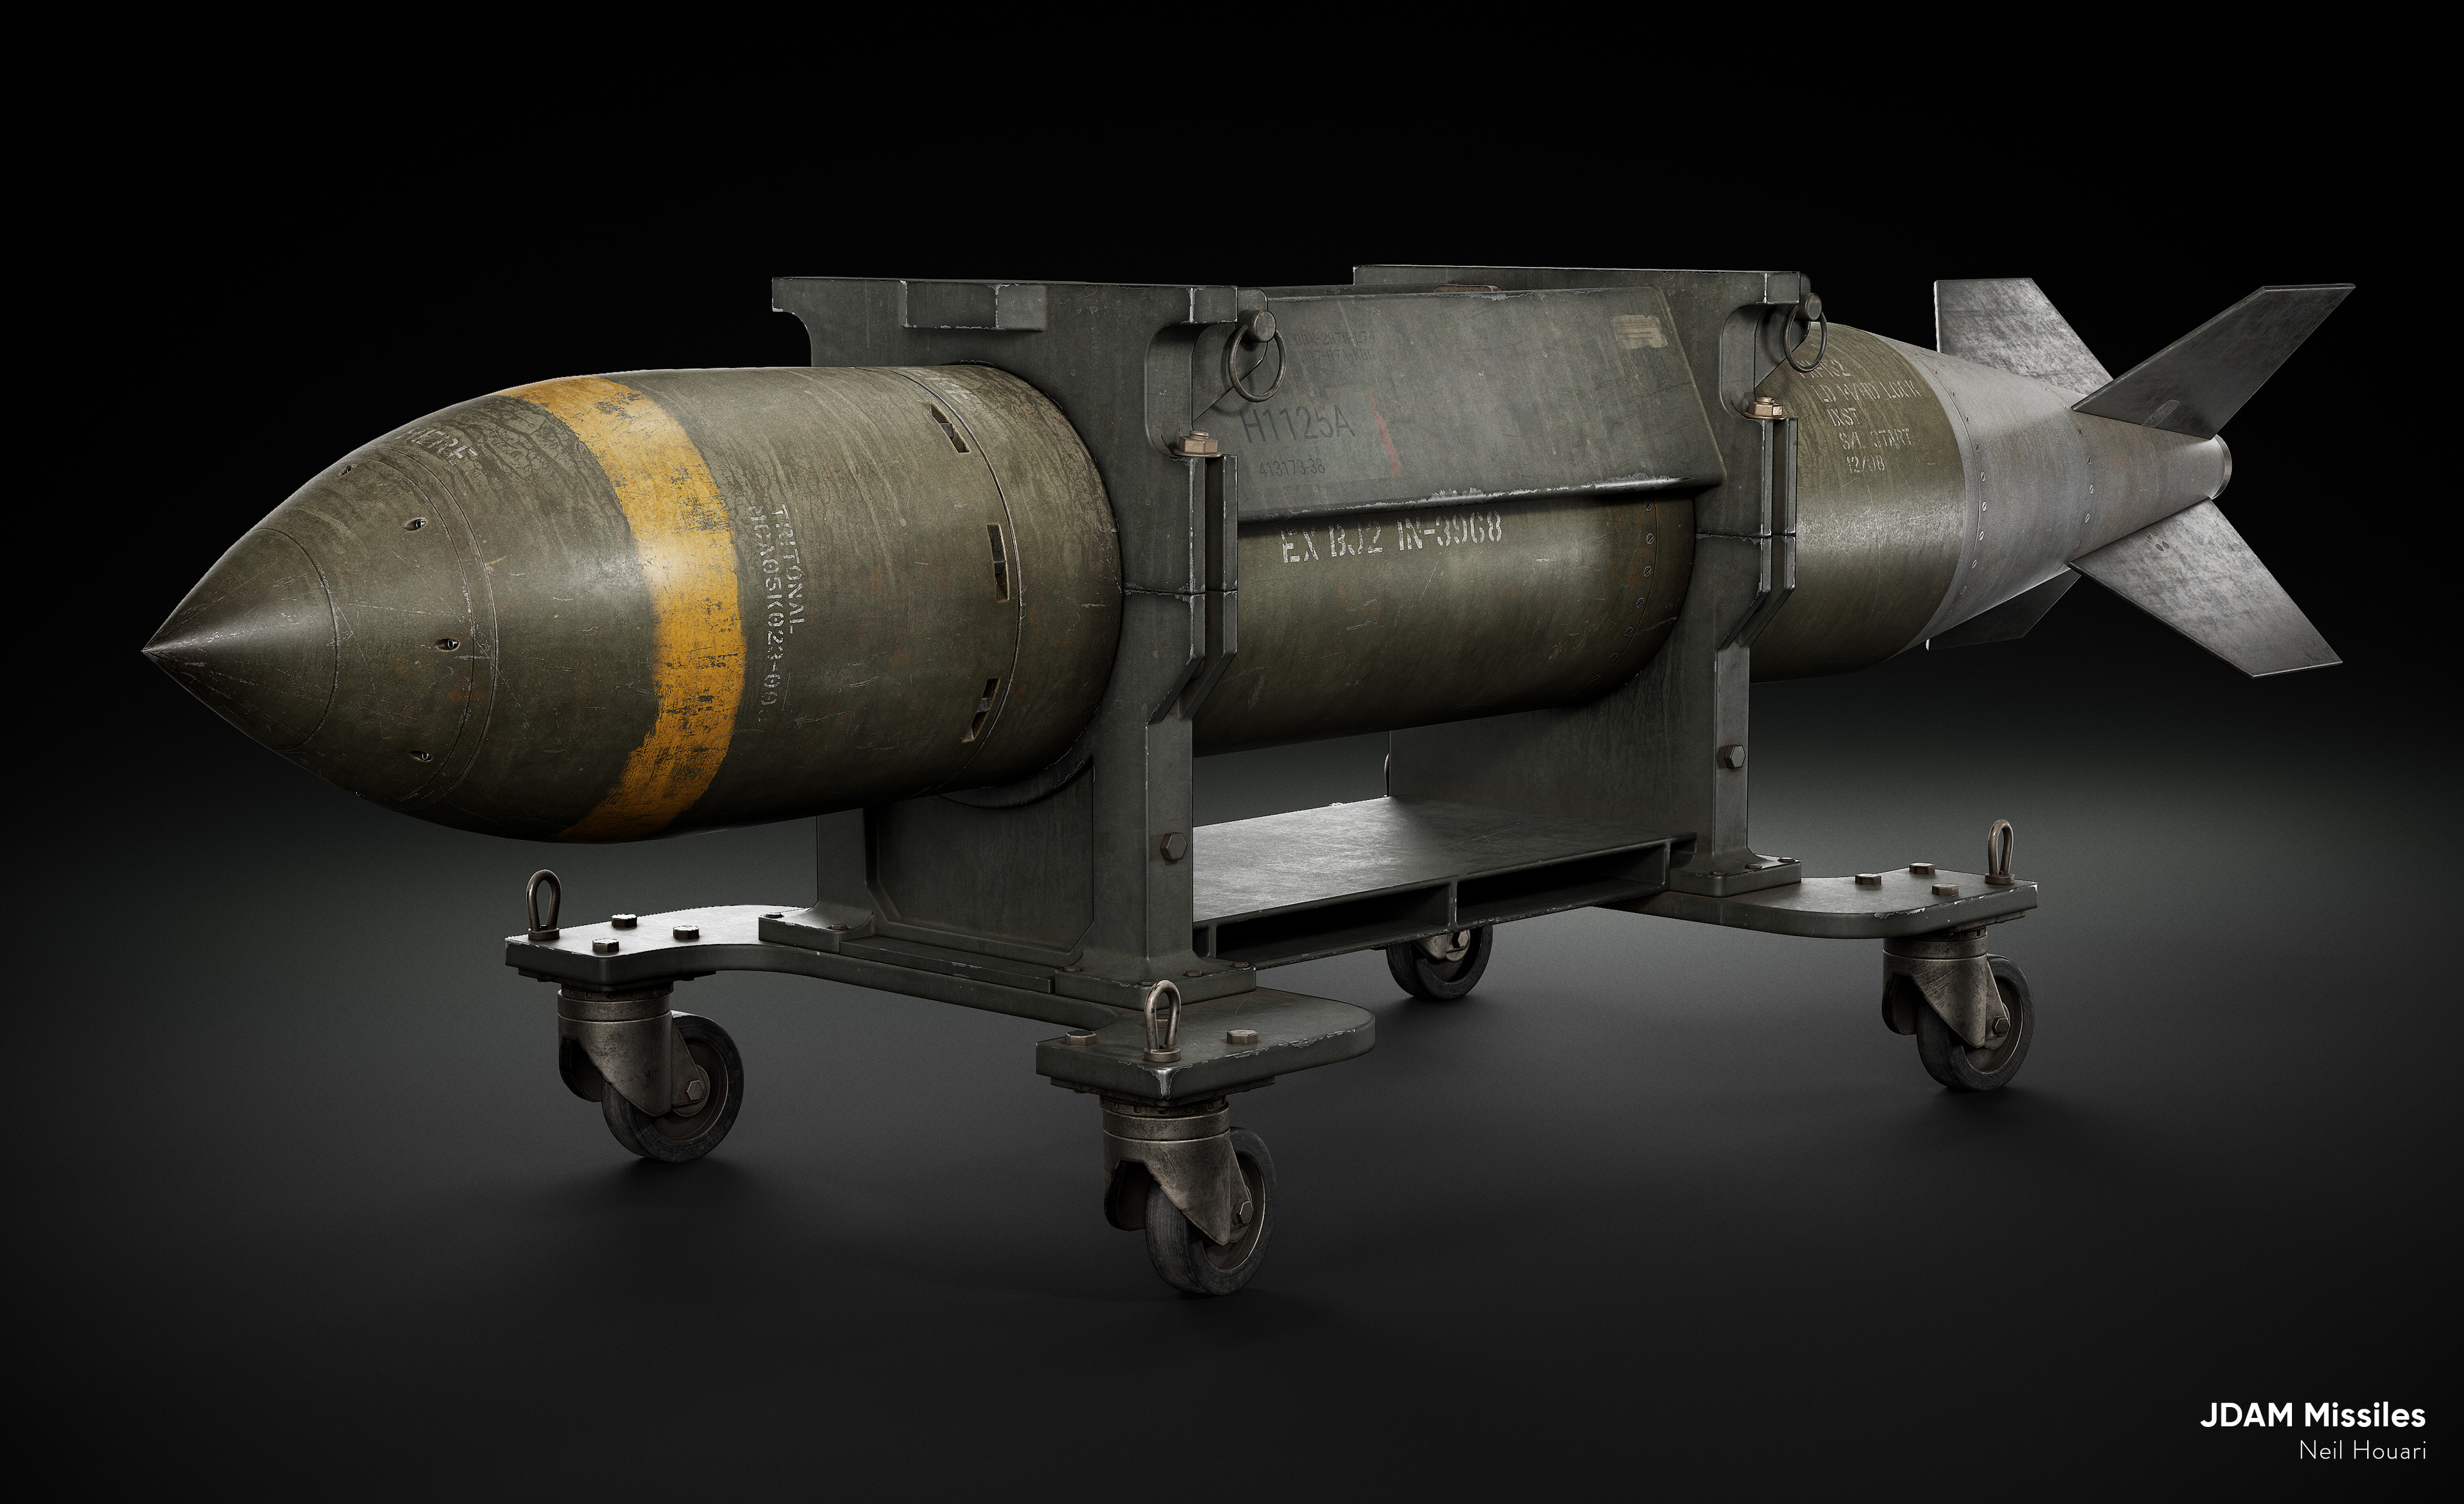 neil-houari-missiles35-png.jpg